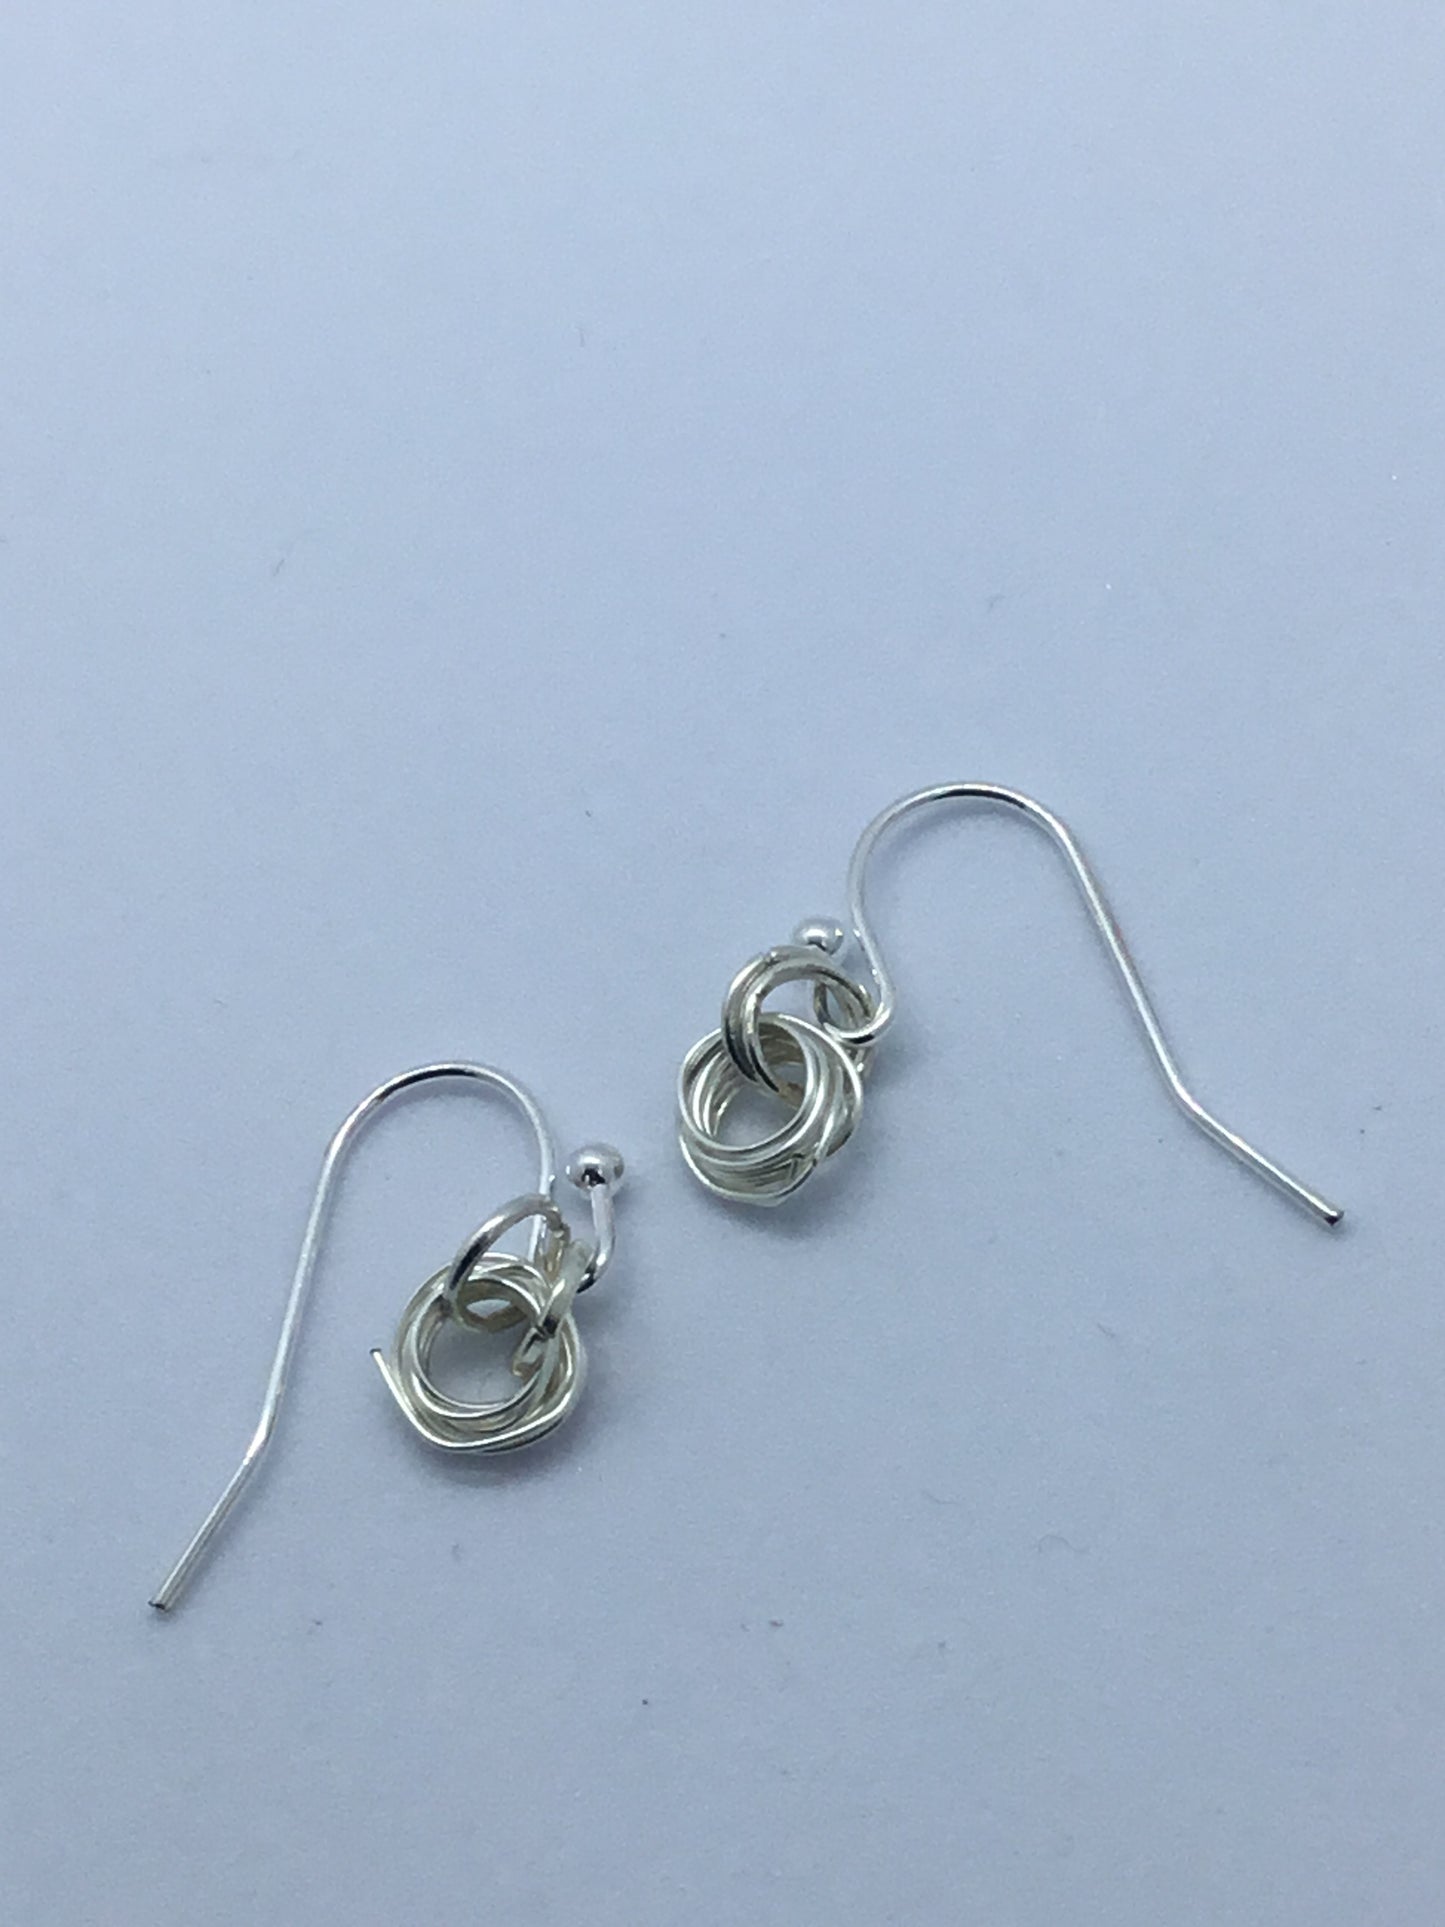 Wire in silver loop earrings